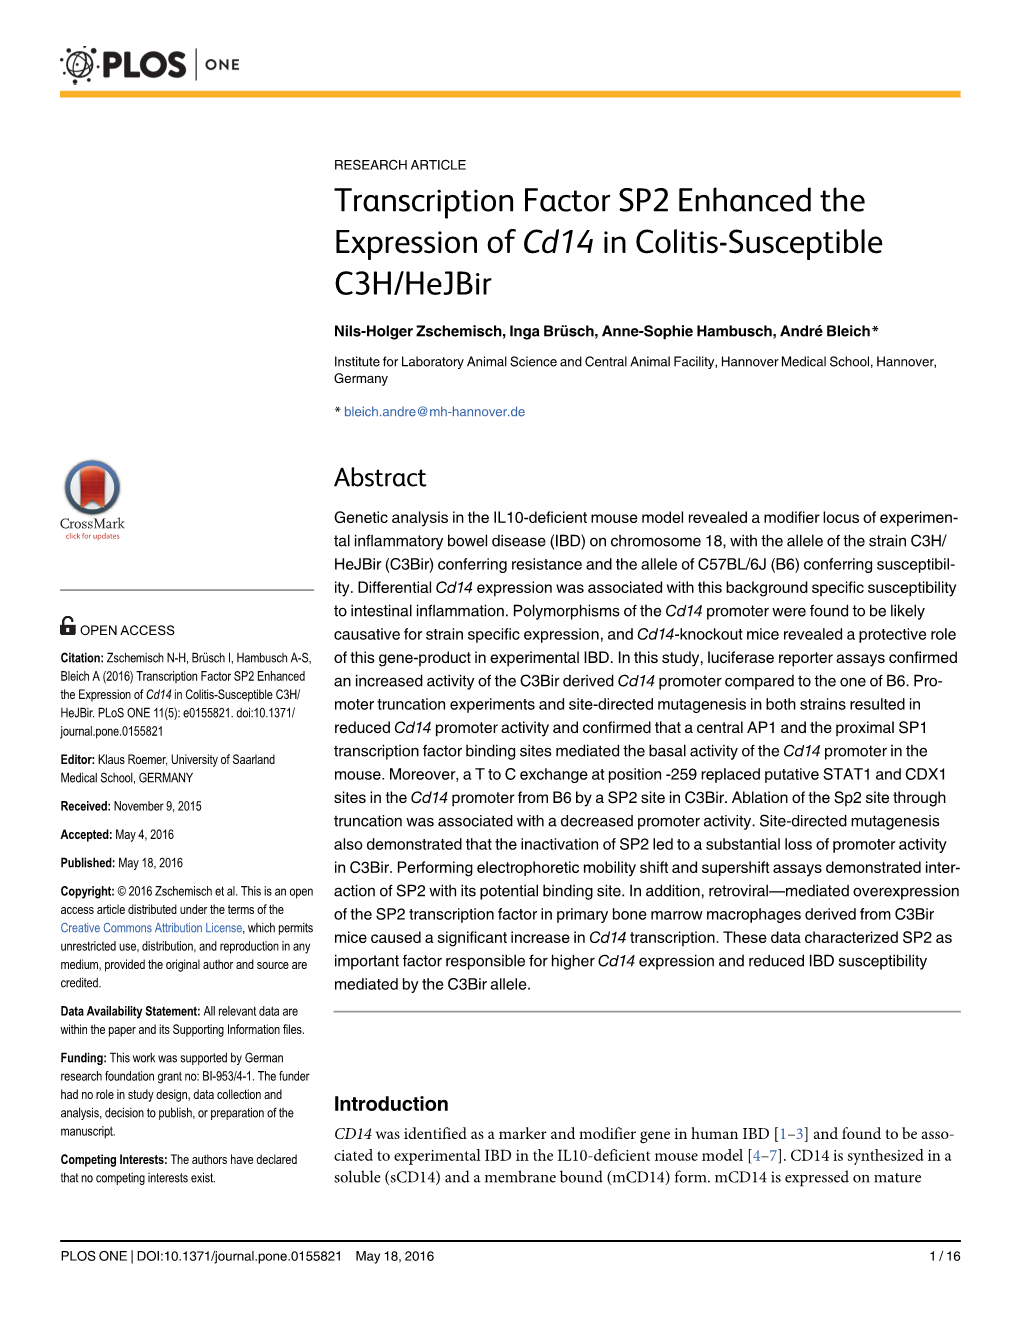 Transcription Factor SP2 Enhanced the Expression of Cd14 in Colitis-Susceptible C3H/Hejbir